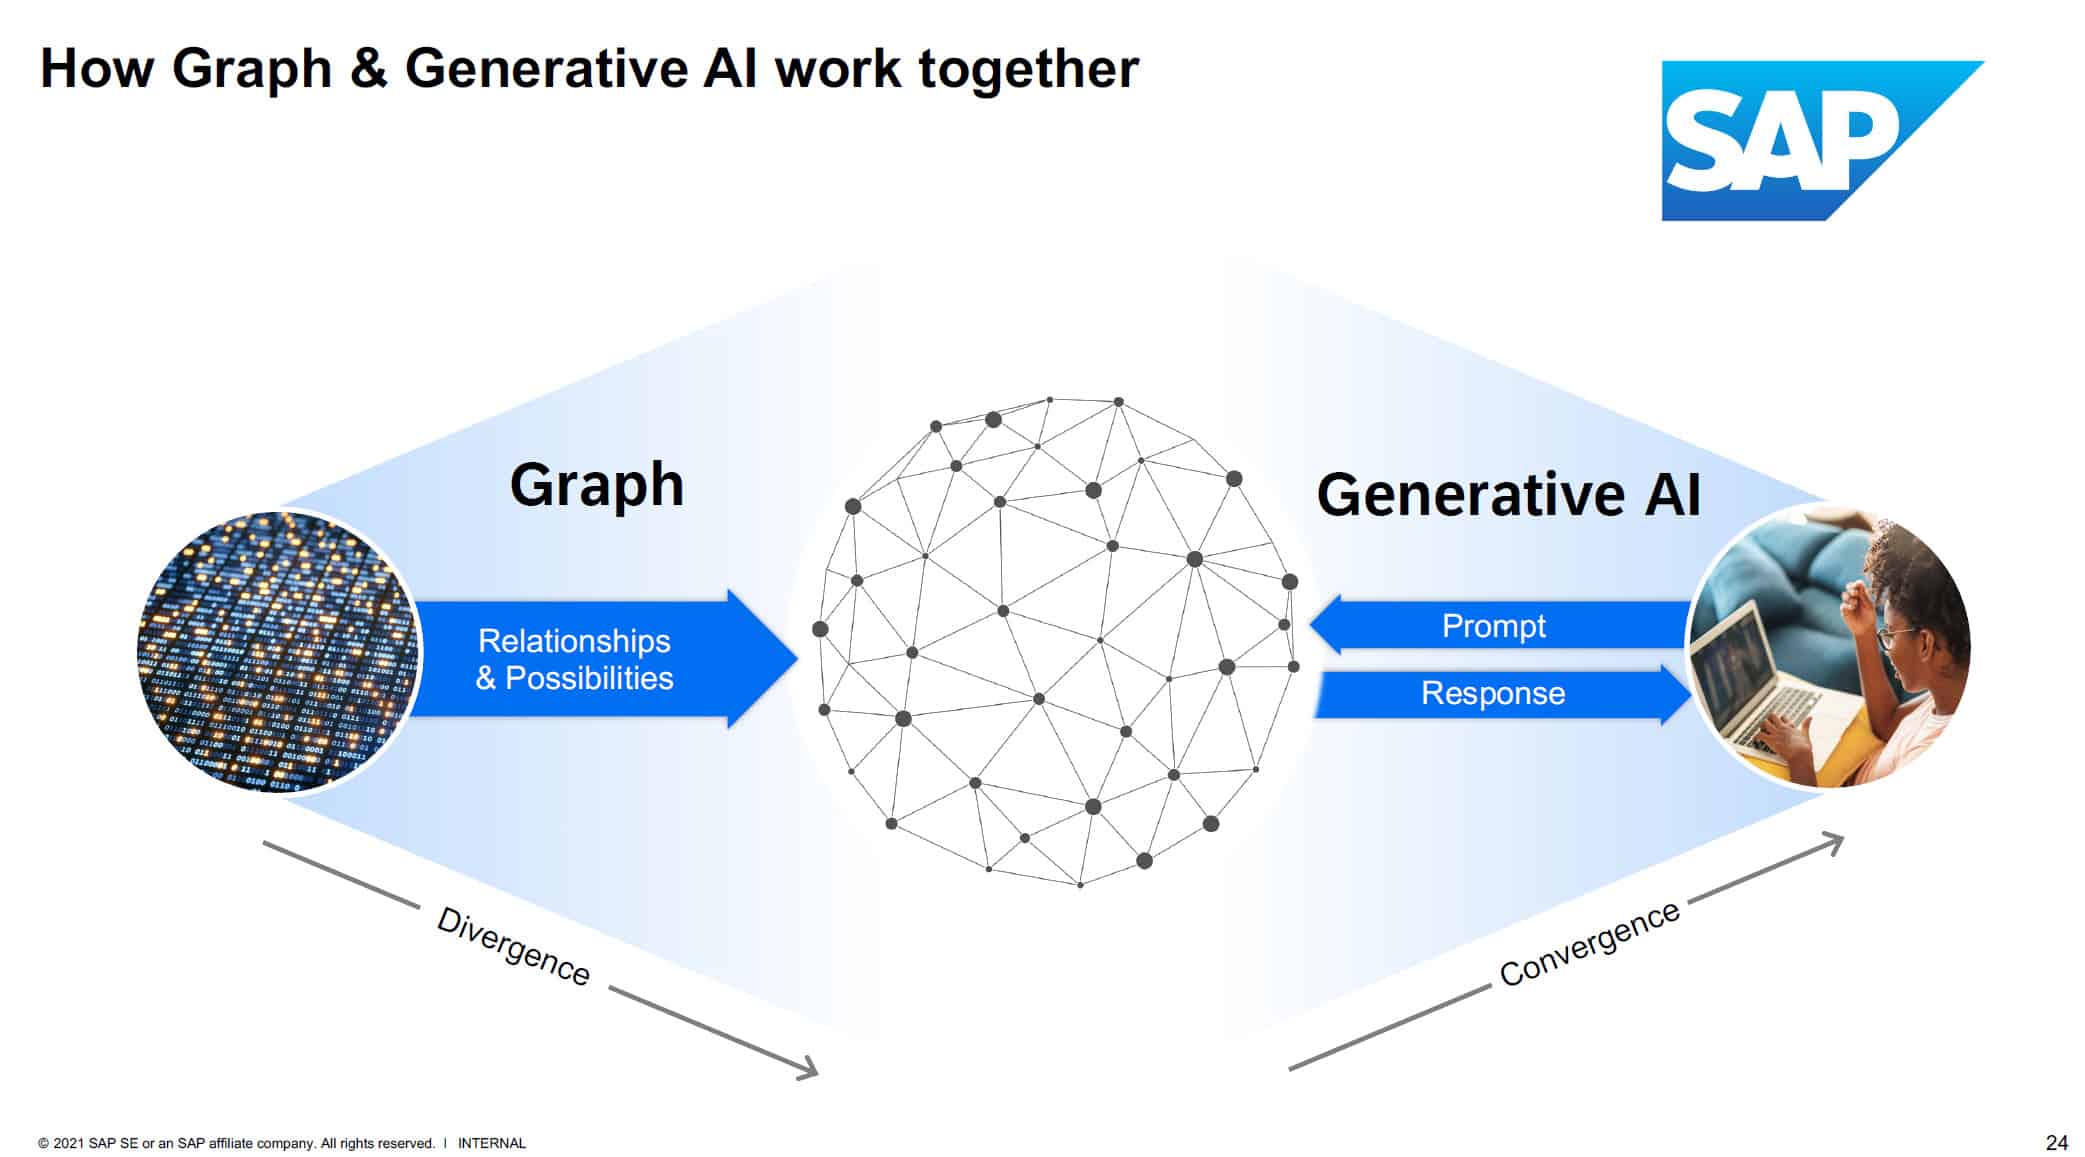 SAP Generative AI strategy